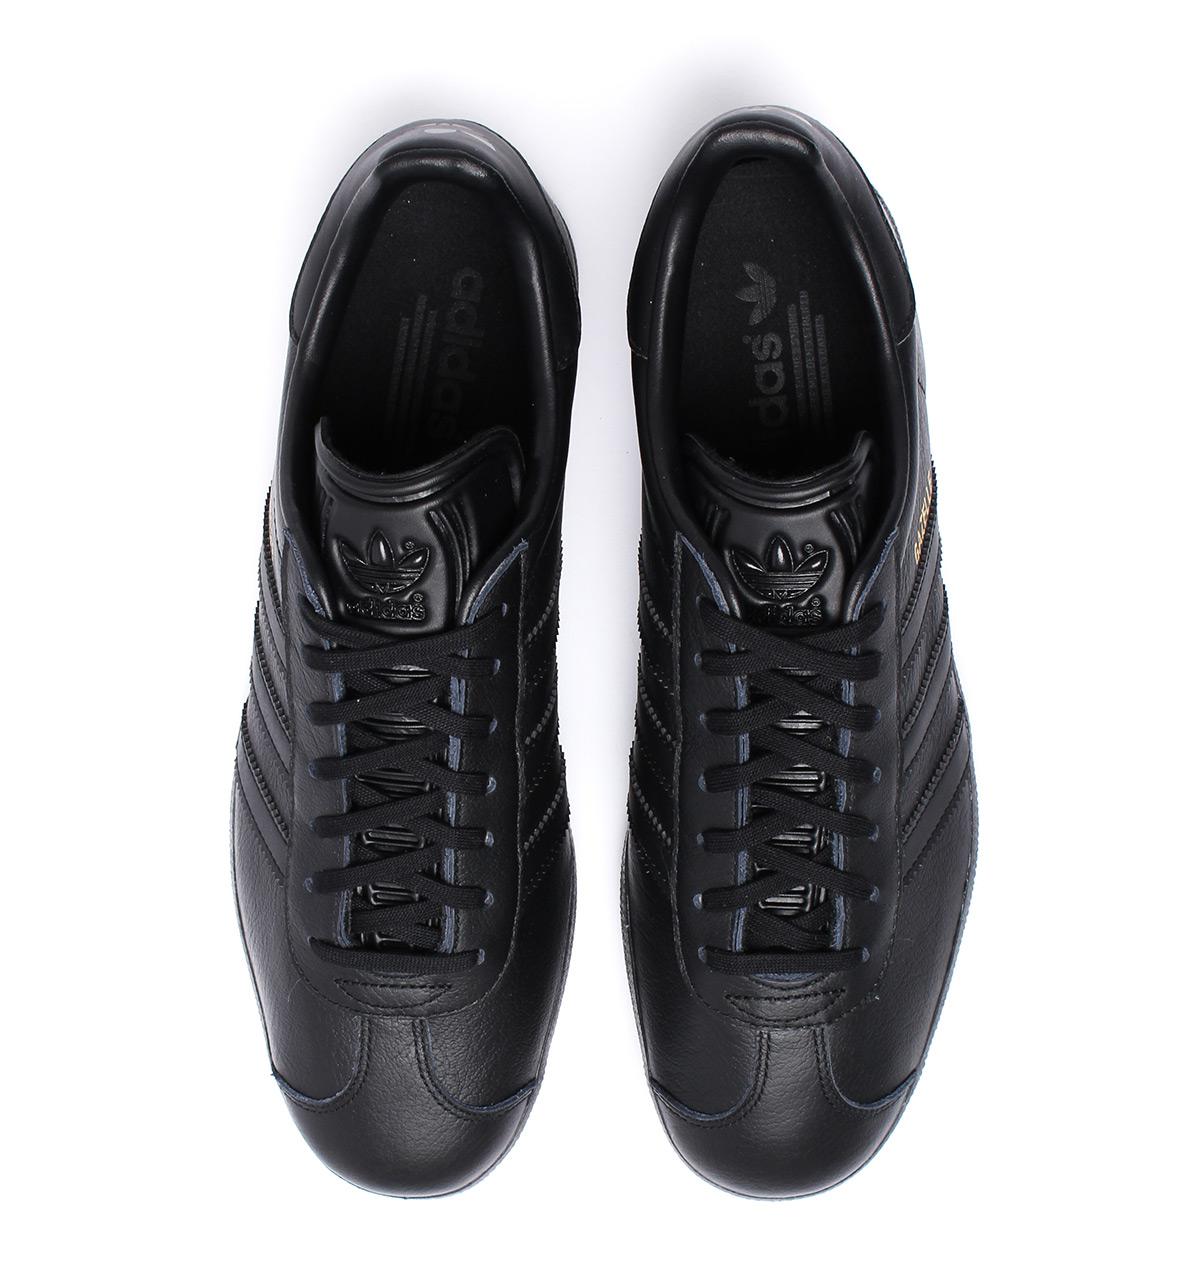 adidas Originals Gazelle Black Leather Trainers for Men - Lyst